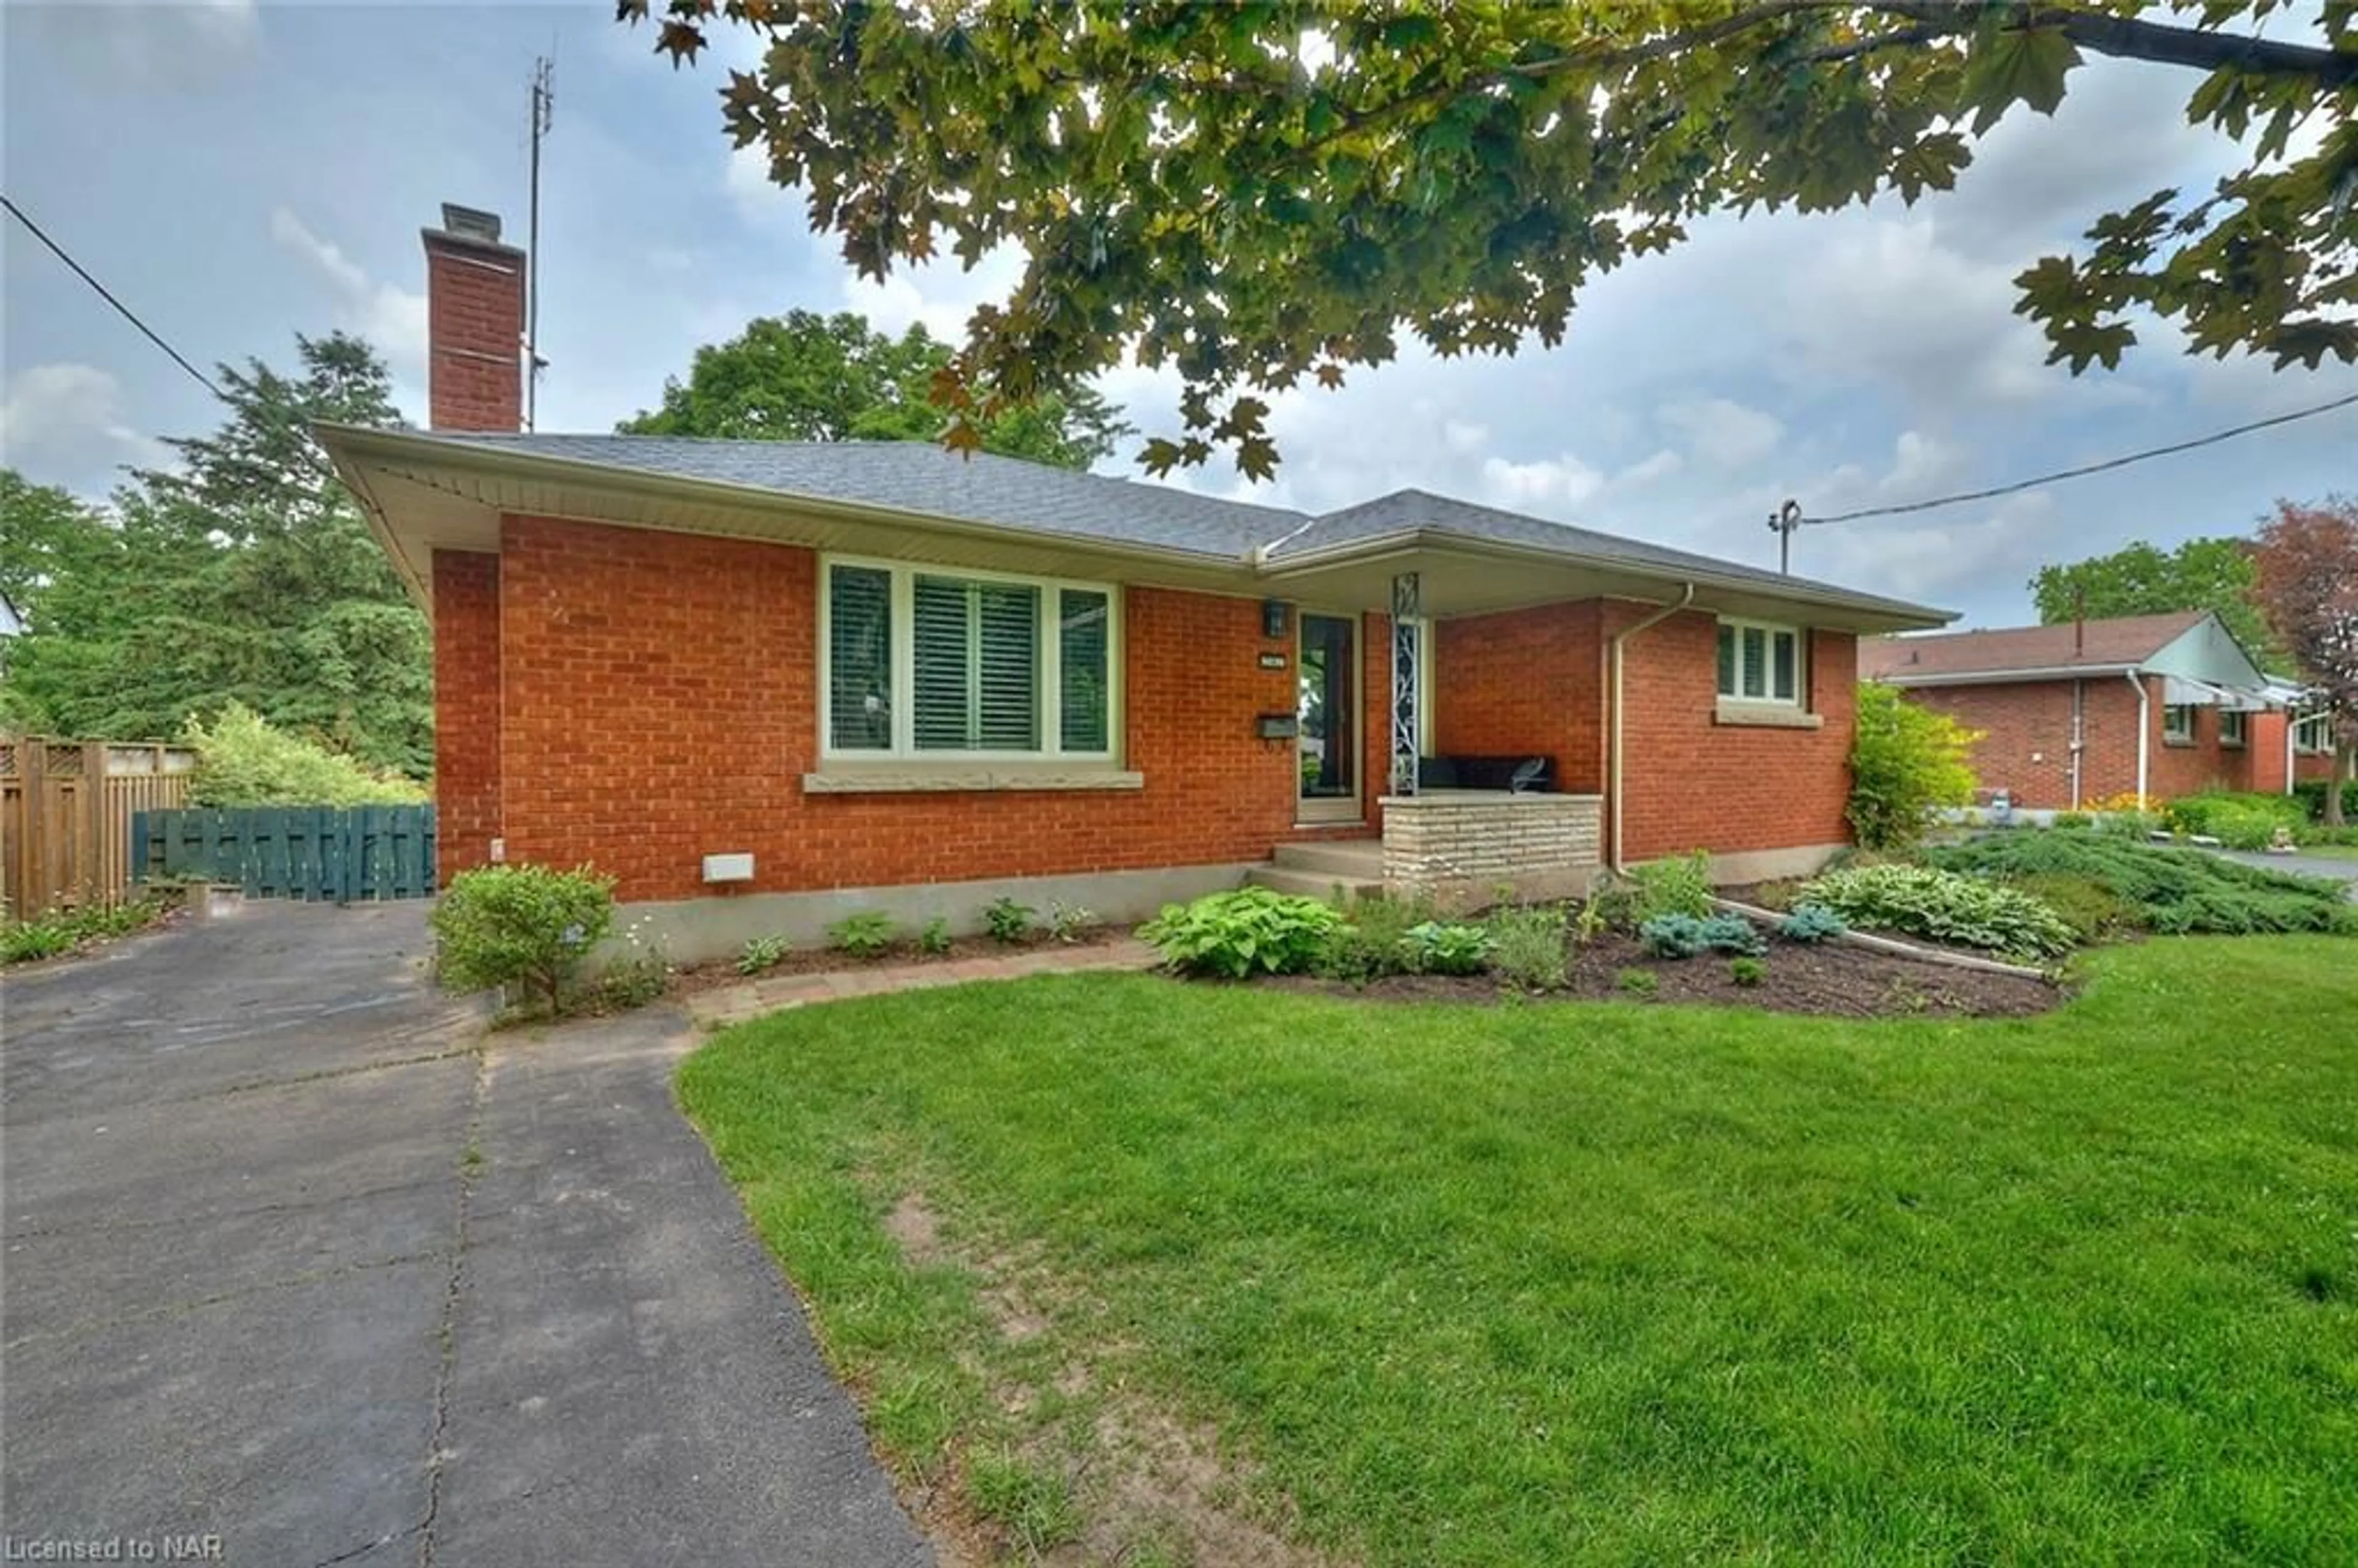 Home with brick exterior material for 5039 Portage Rd, Niagara Falls Ontario L2E 6B5